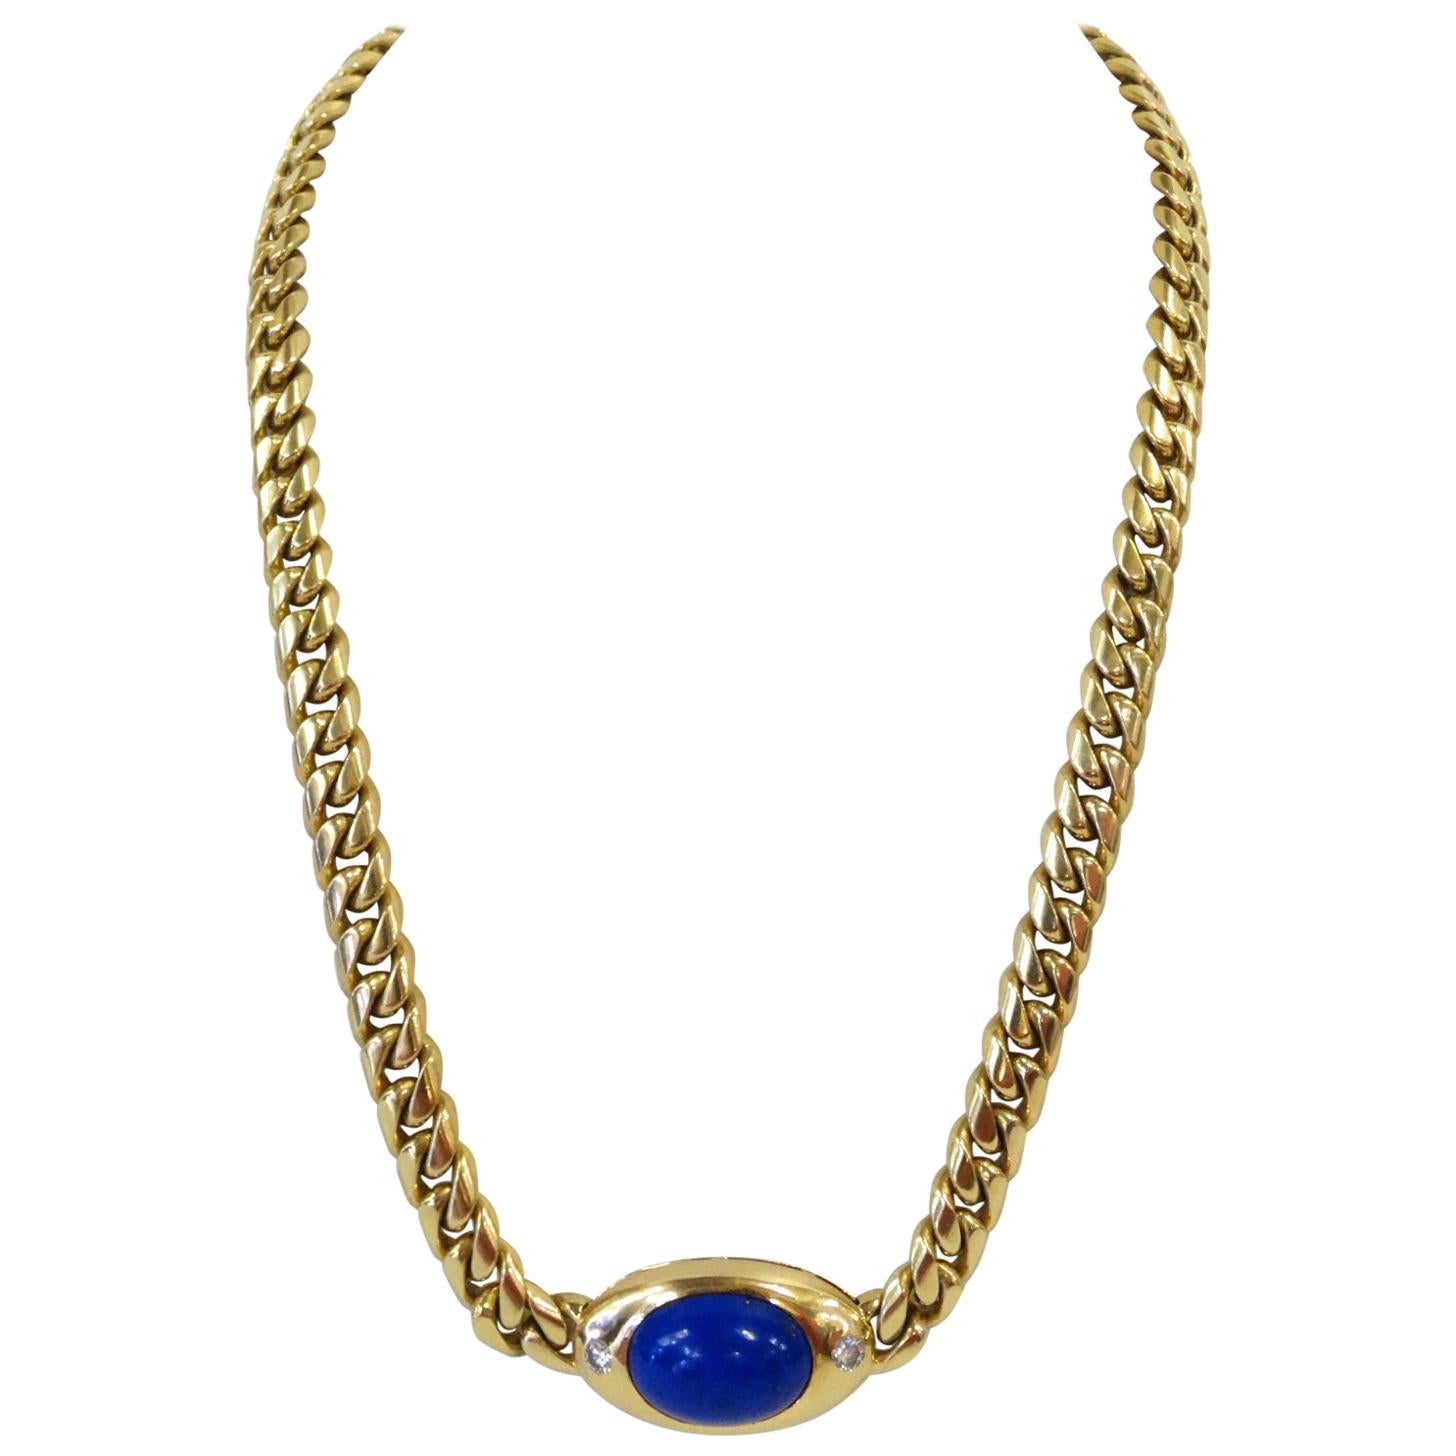  Bulgari 18K Gold & Lapis Lazuli Collar Necklace 